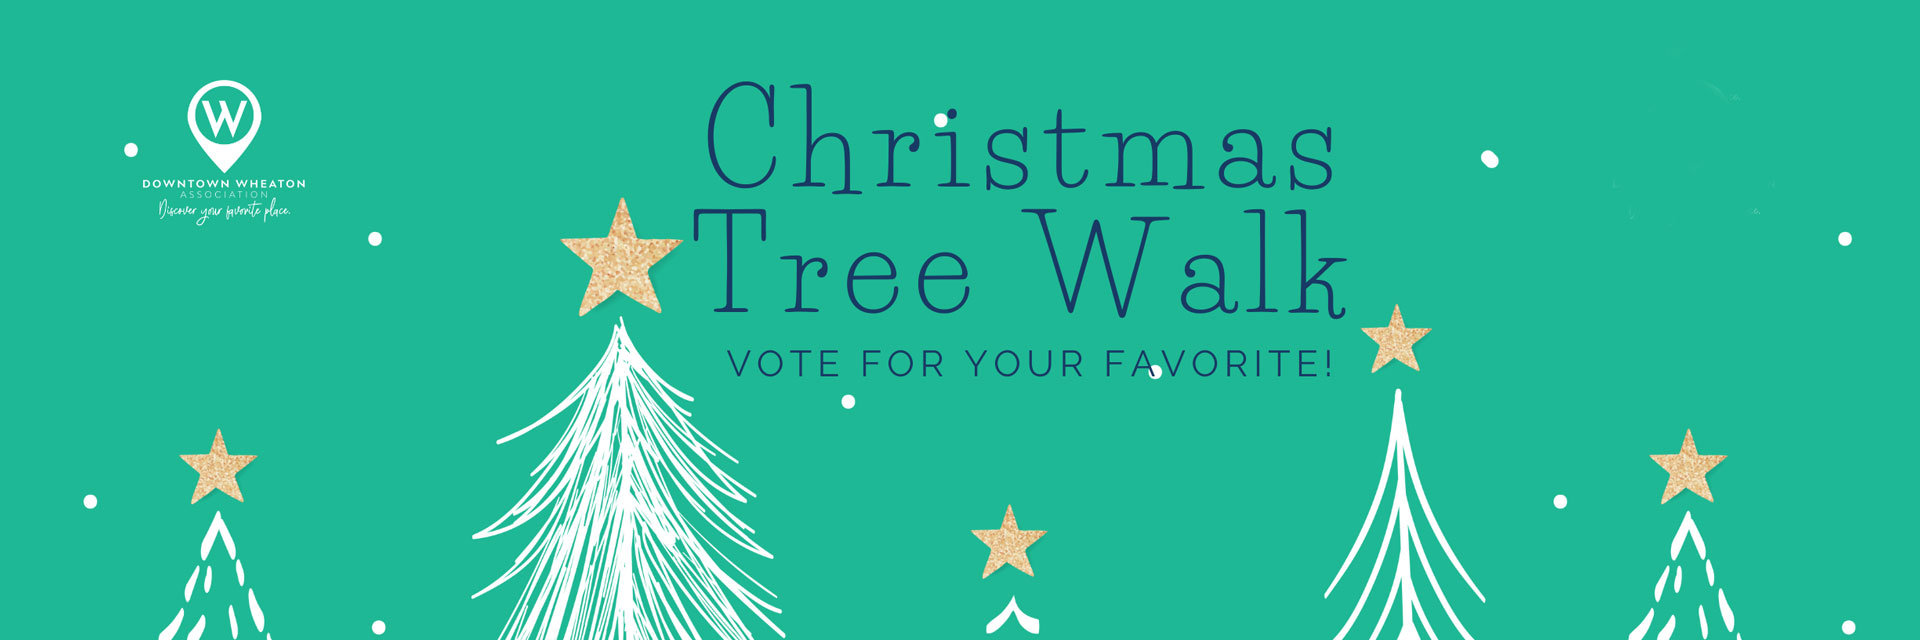 Christmas-Tree-Walk